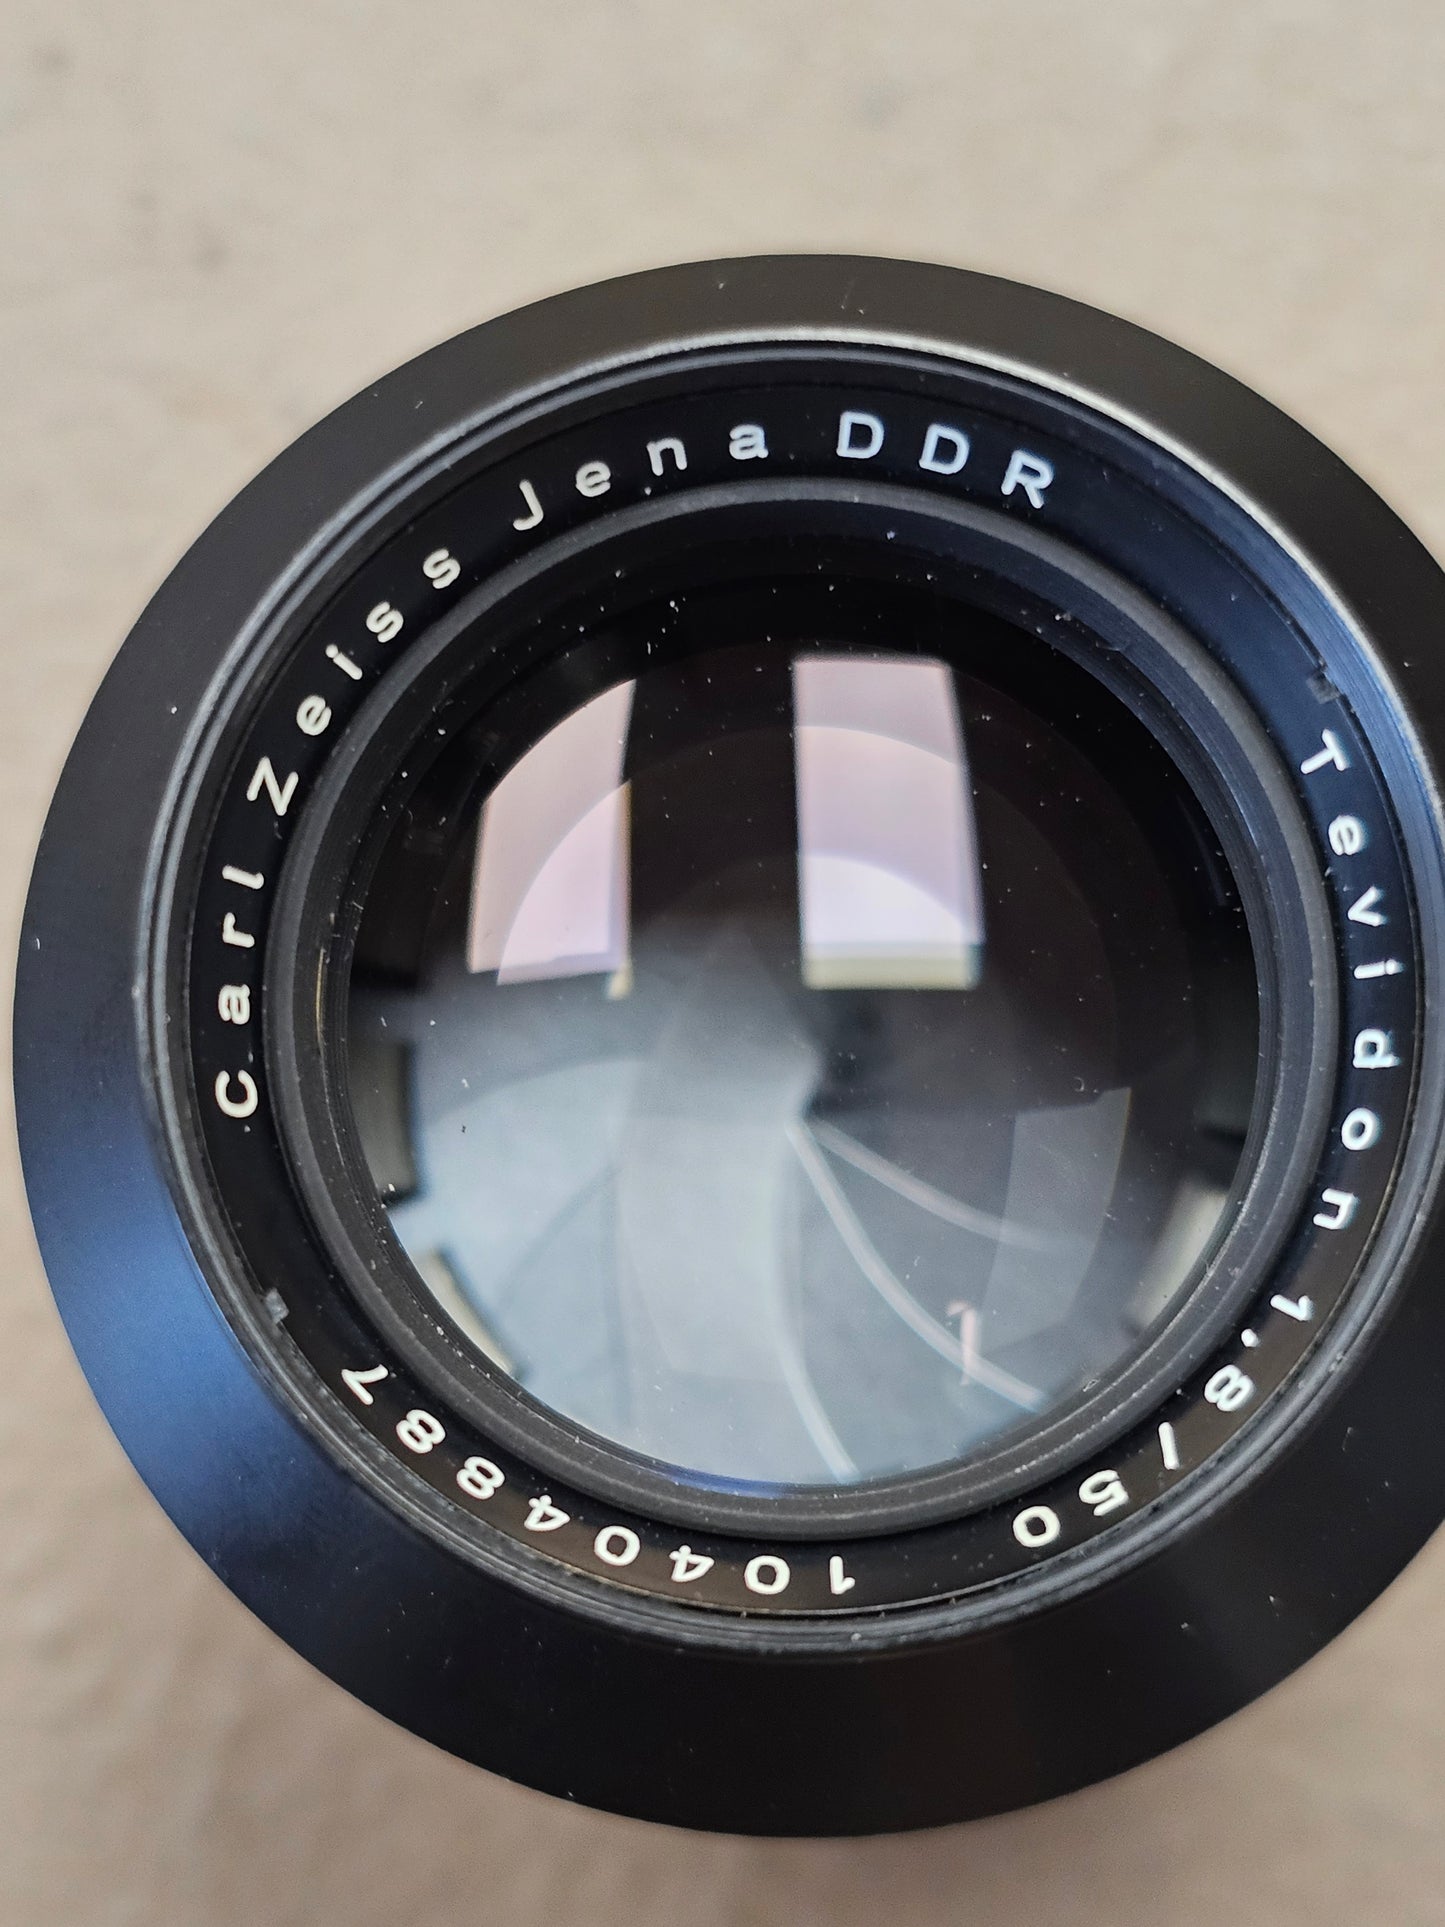 Carl Zeiss Jena DDR Tevidon 50mm f1.8 C-Mount Lens S# 10404887